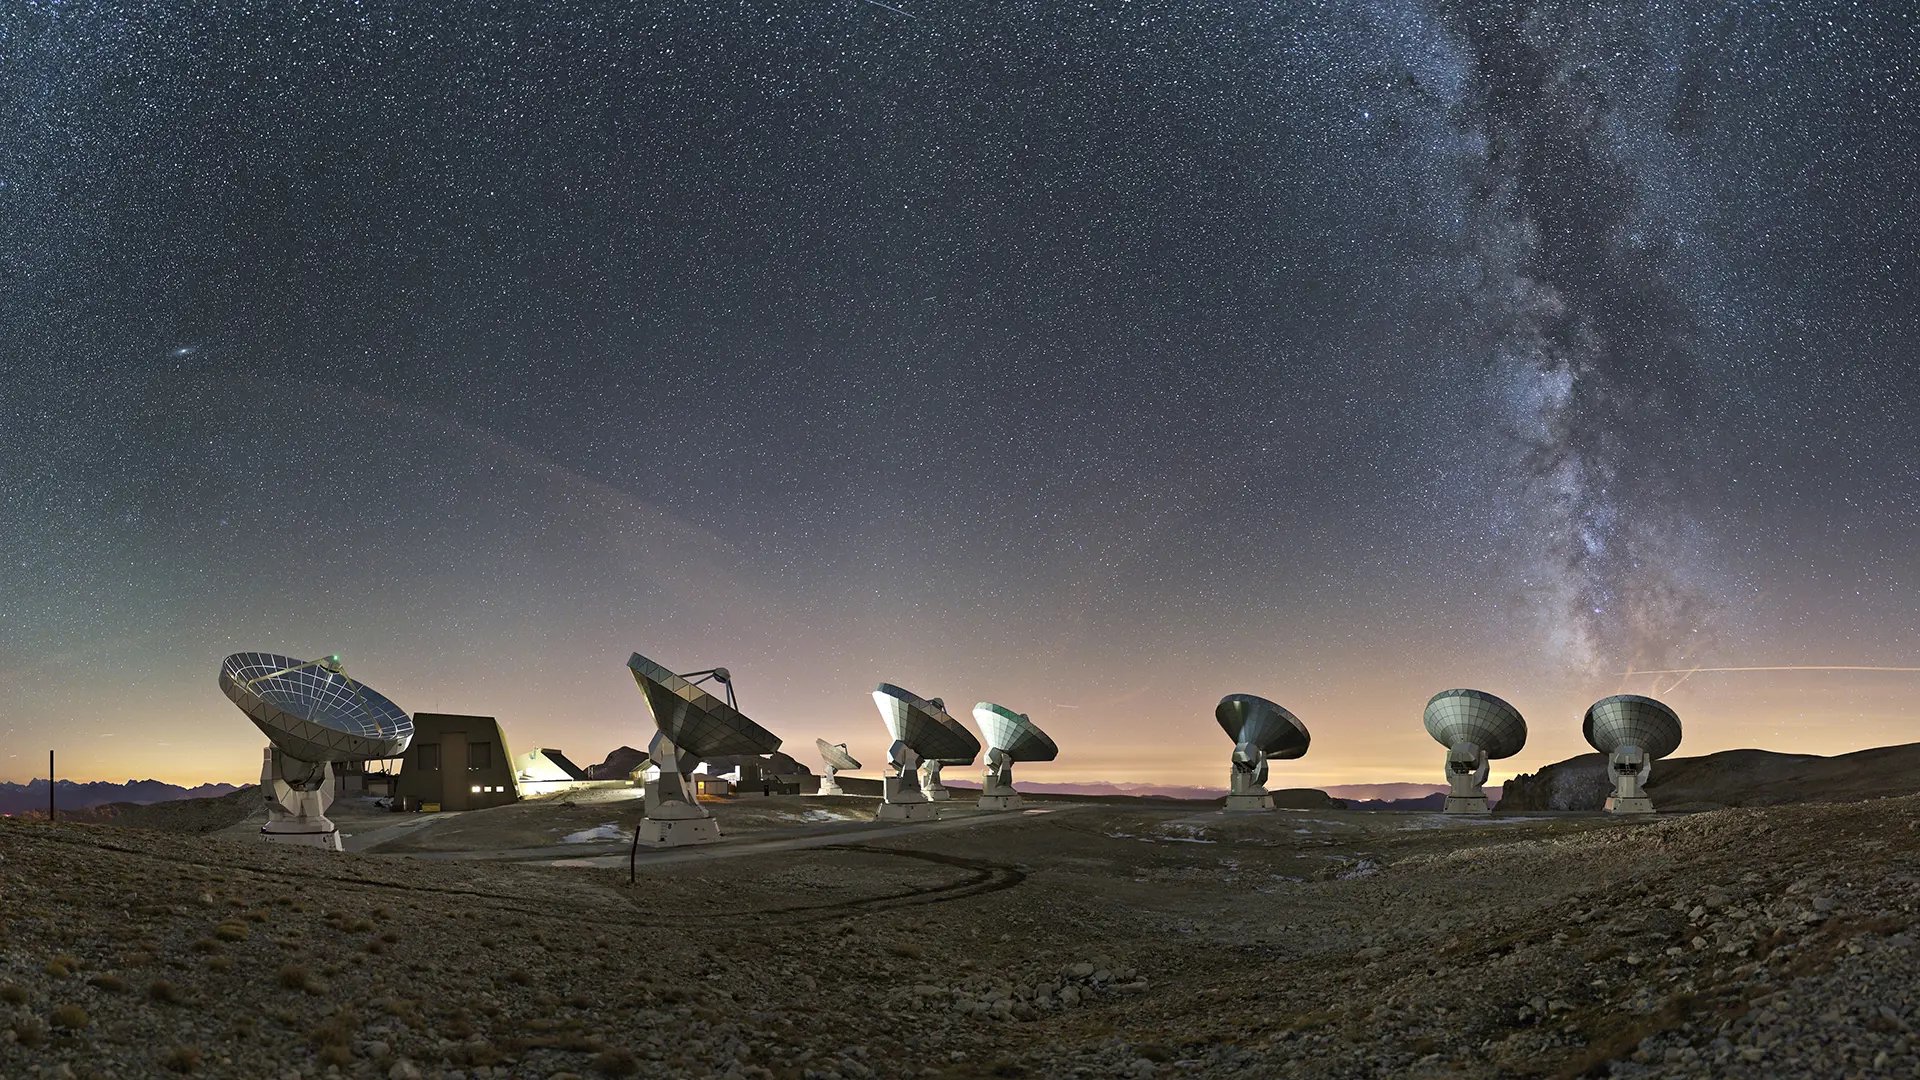 Radio telescope antennas under the night sky